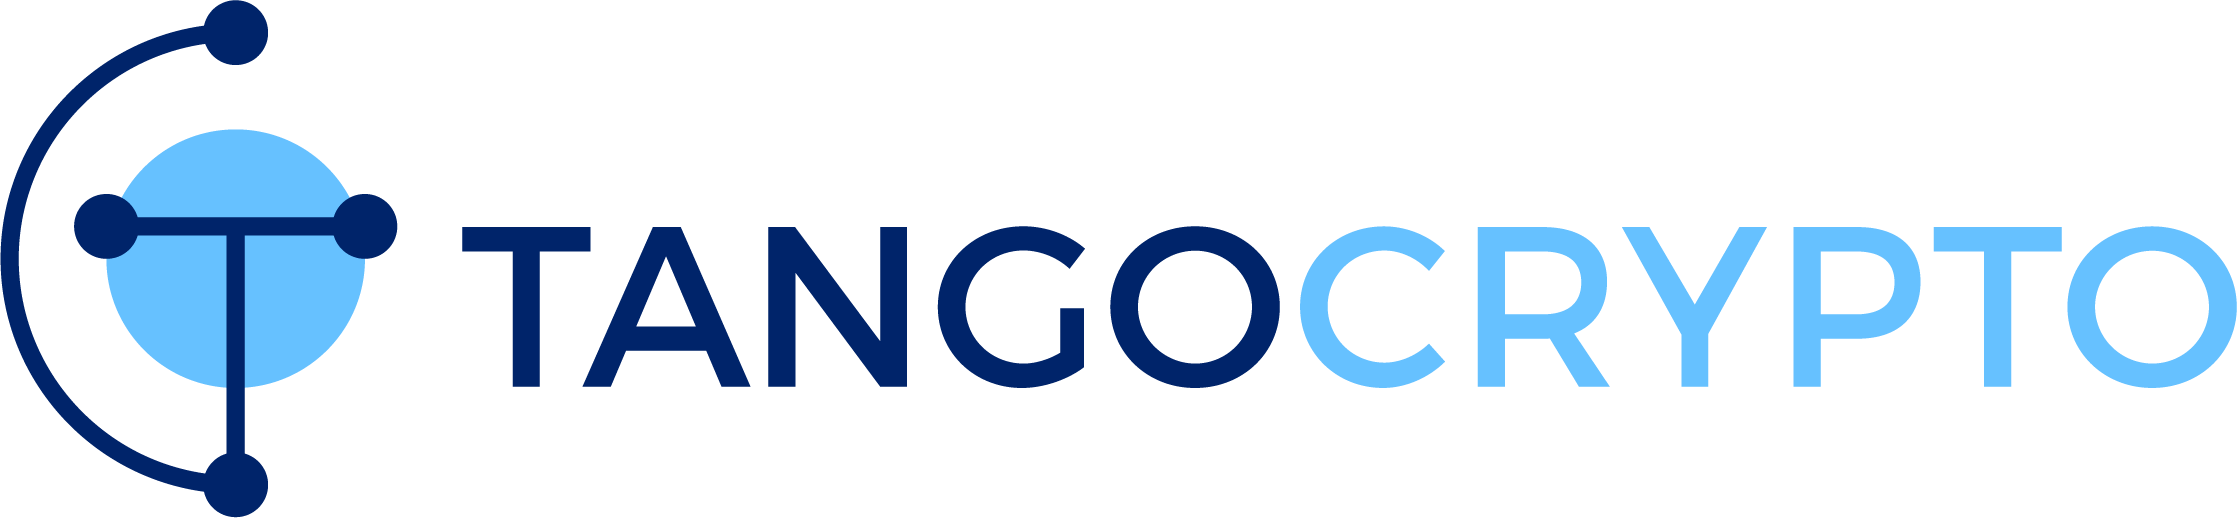 Tangocrypto logo